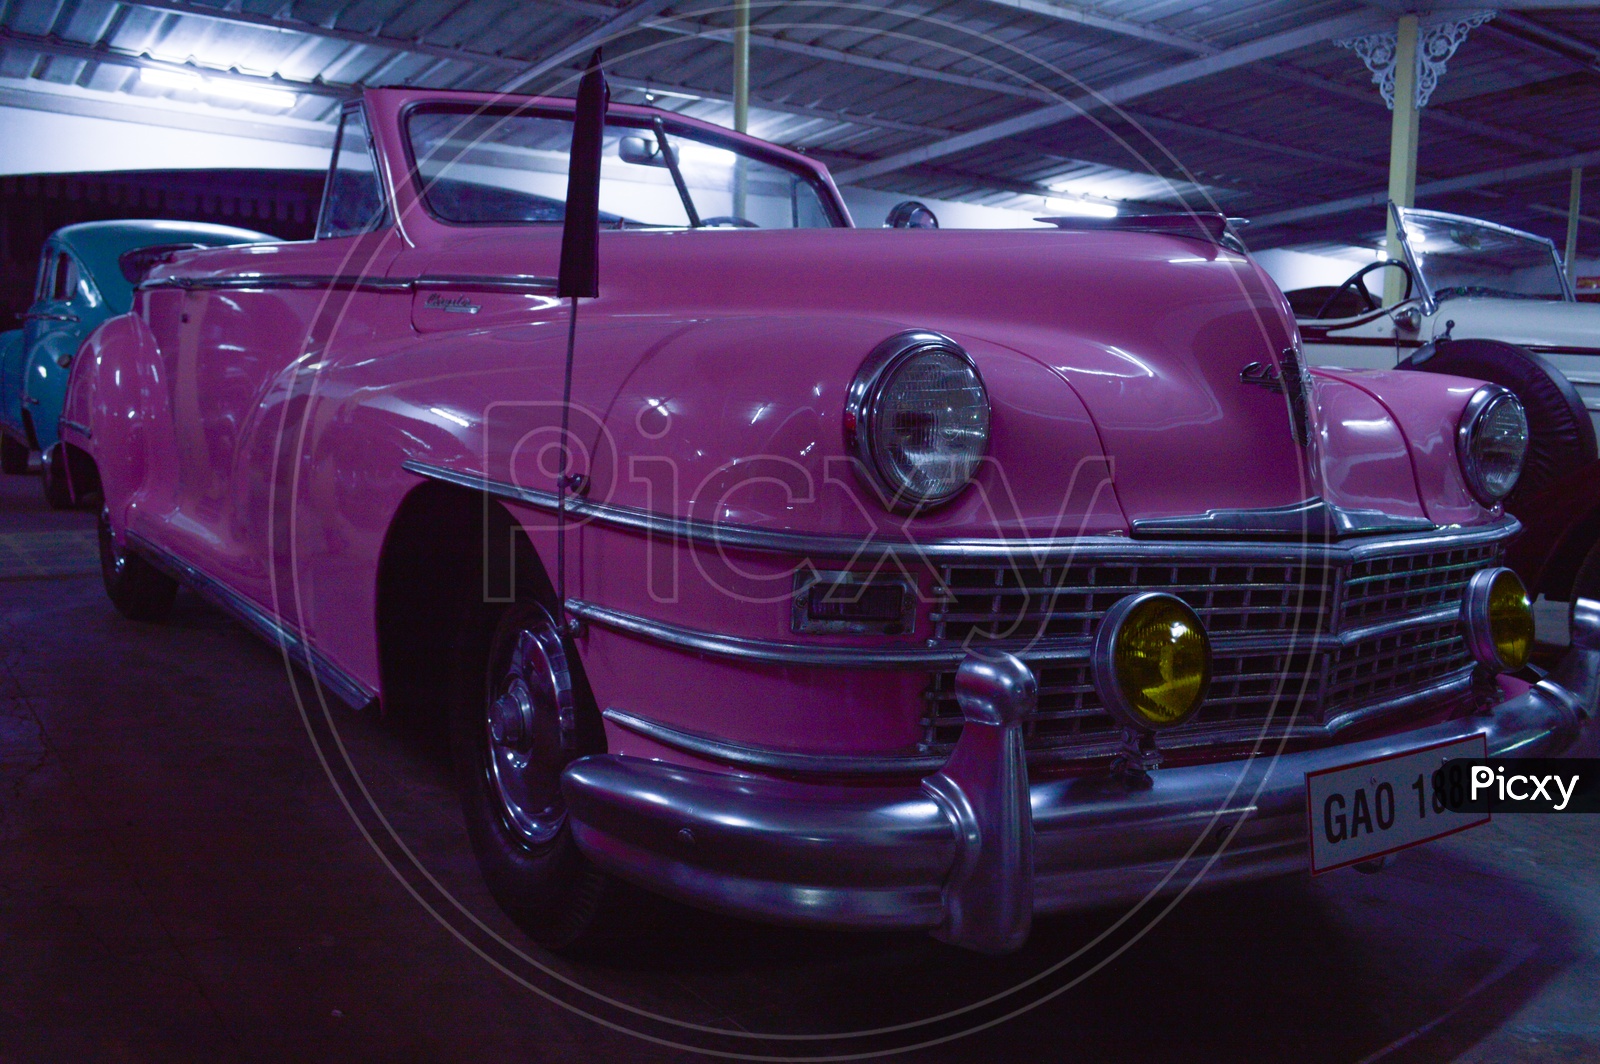 Chrysler Windsor - Vintage Luxury Car - USA Make - Orthogonal View - Convertible car